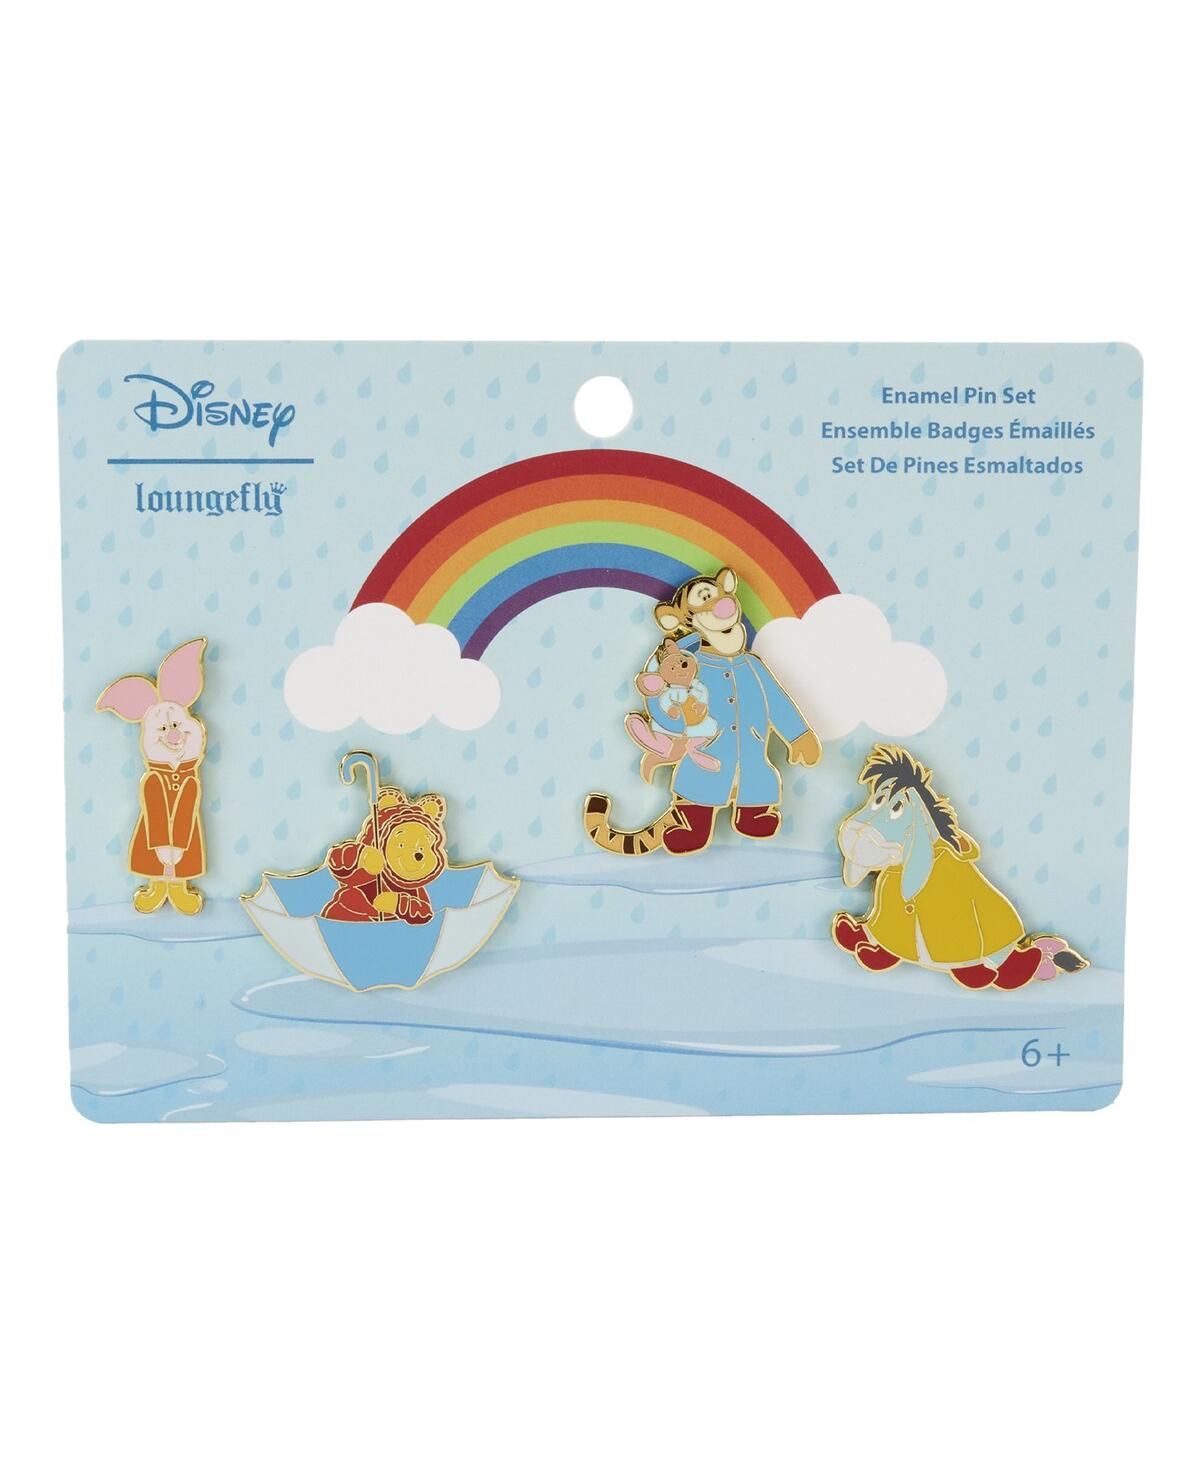 Winnie the Pooh Rainy Day 4-Pack Pin Set - Multi